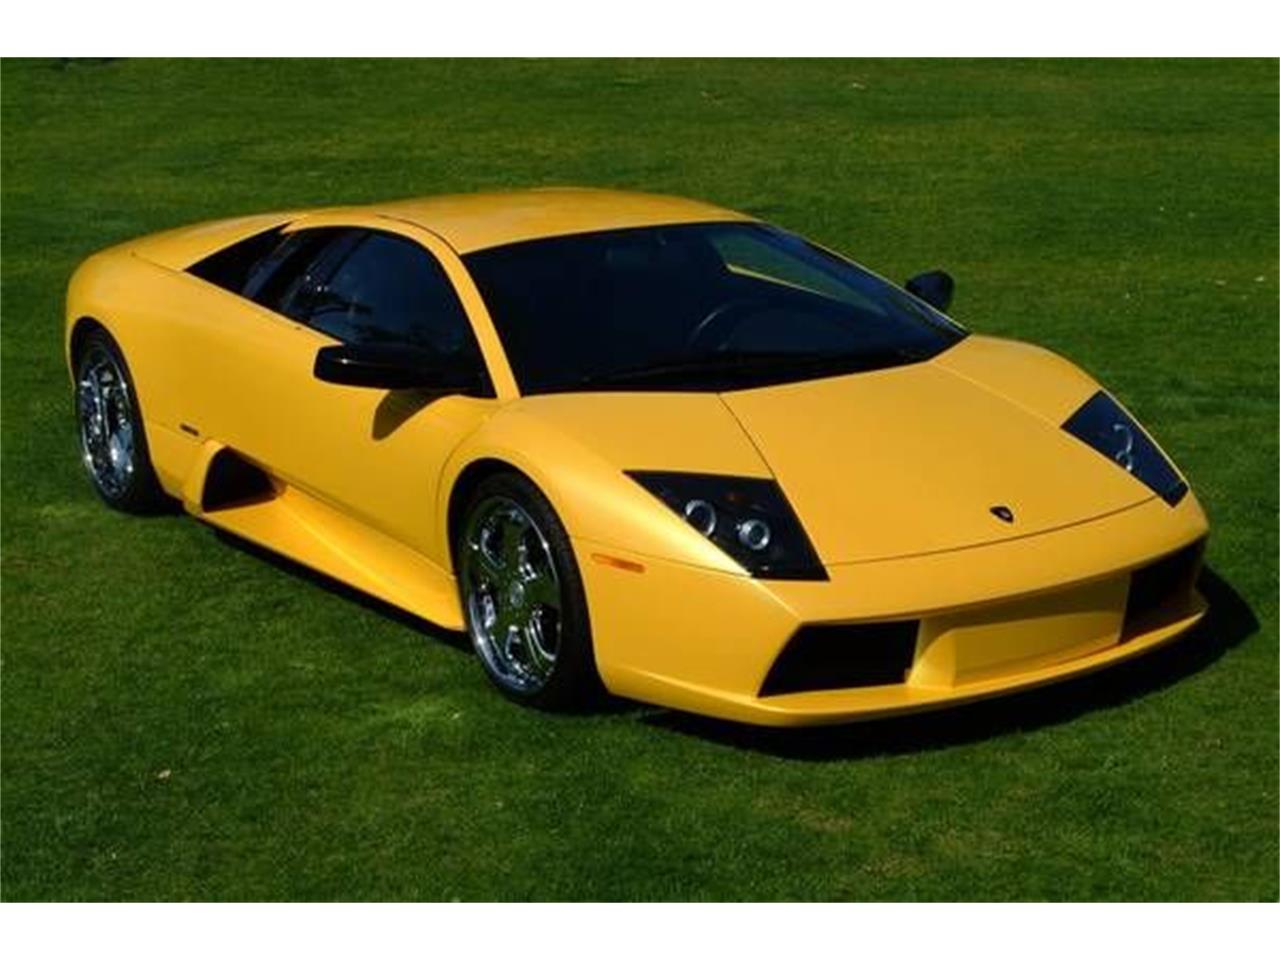 2003 Lamborghini Murcielago for Sale | ClassicCars.com ...